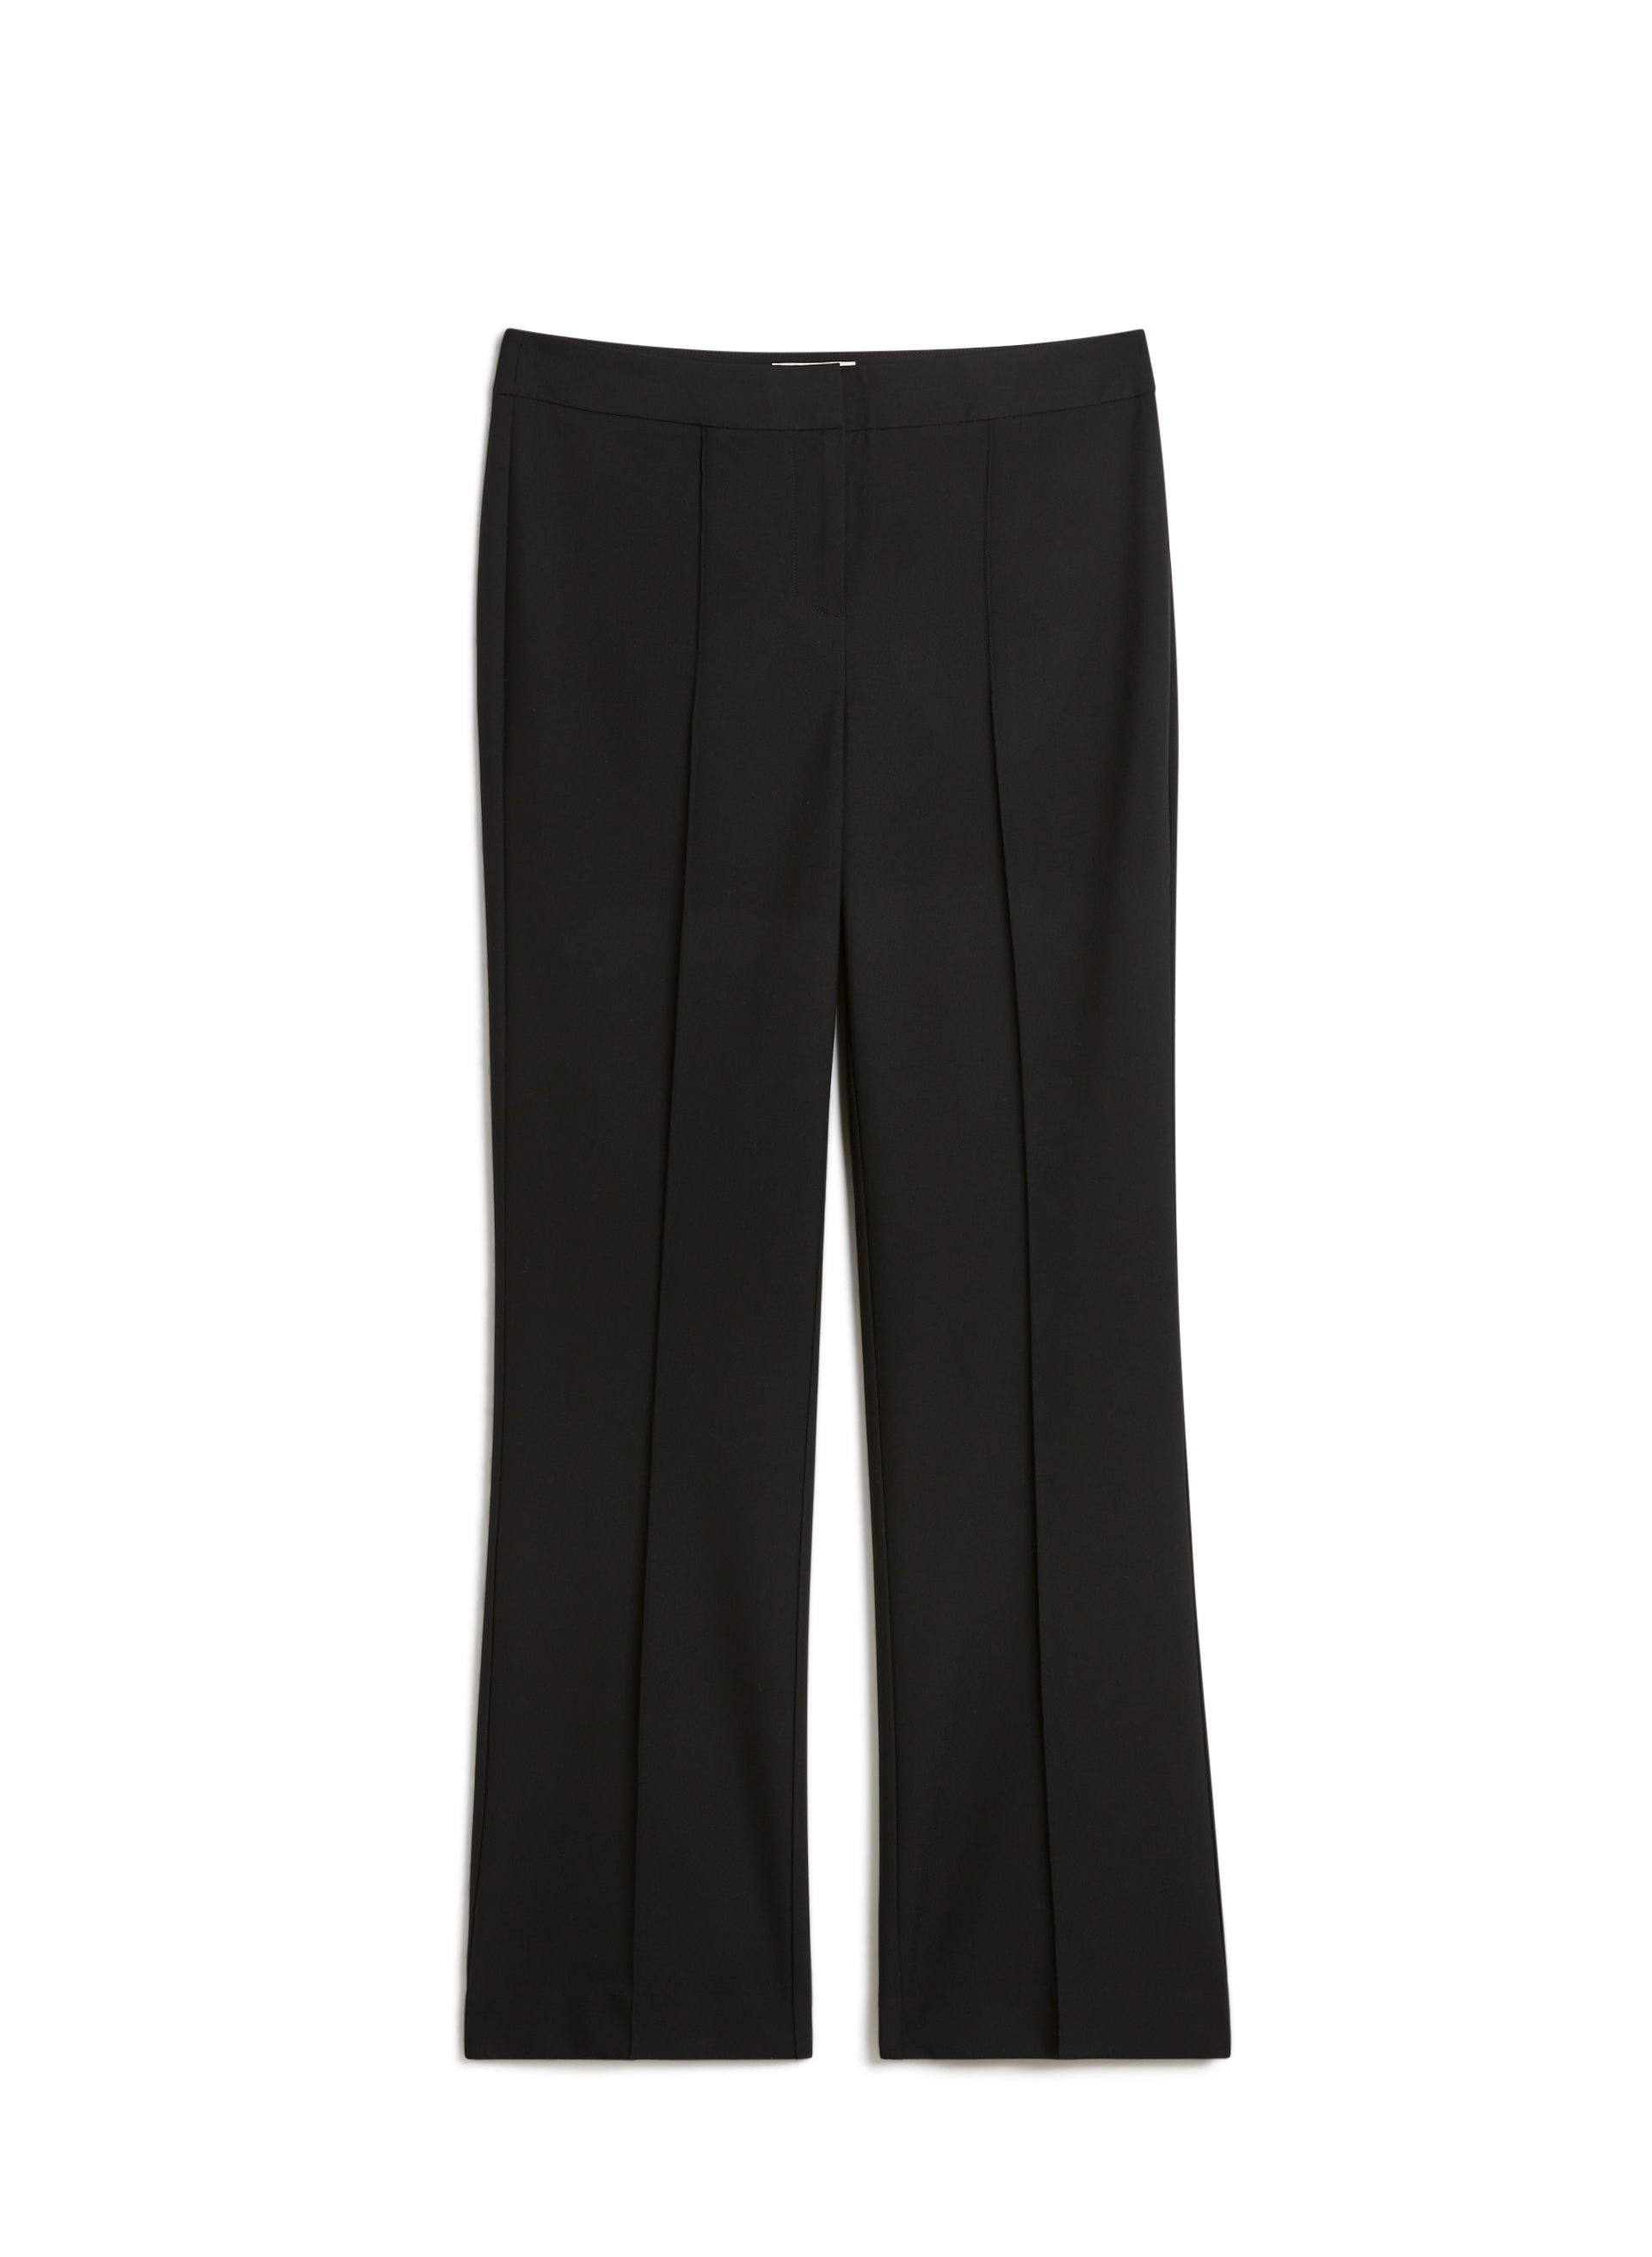 NWT Xersion Boot Cut quick dri Yoga Pants Black Large-XLarge T